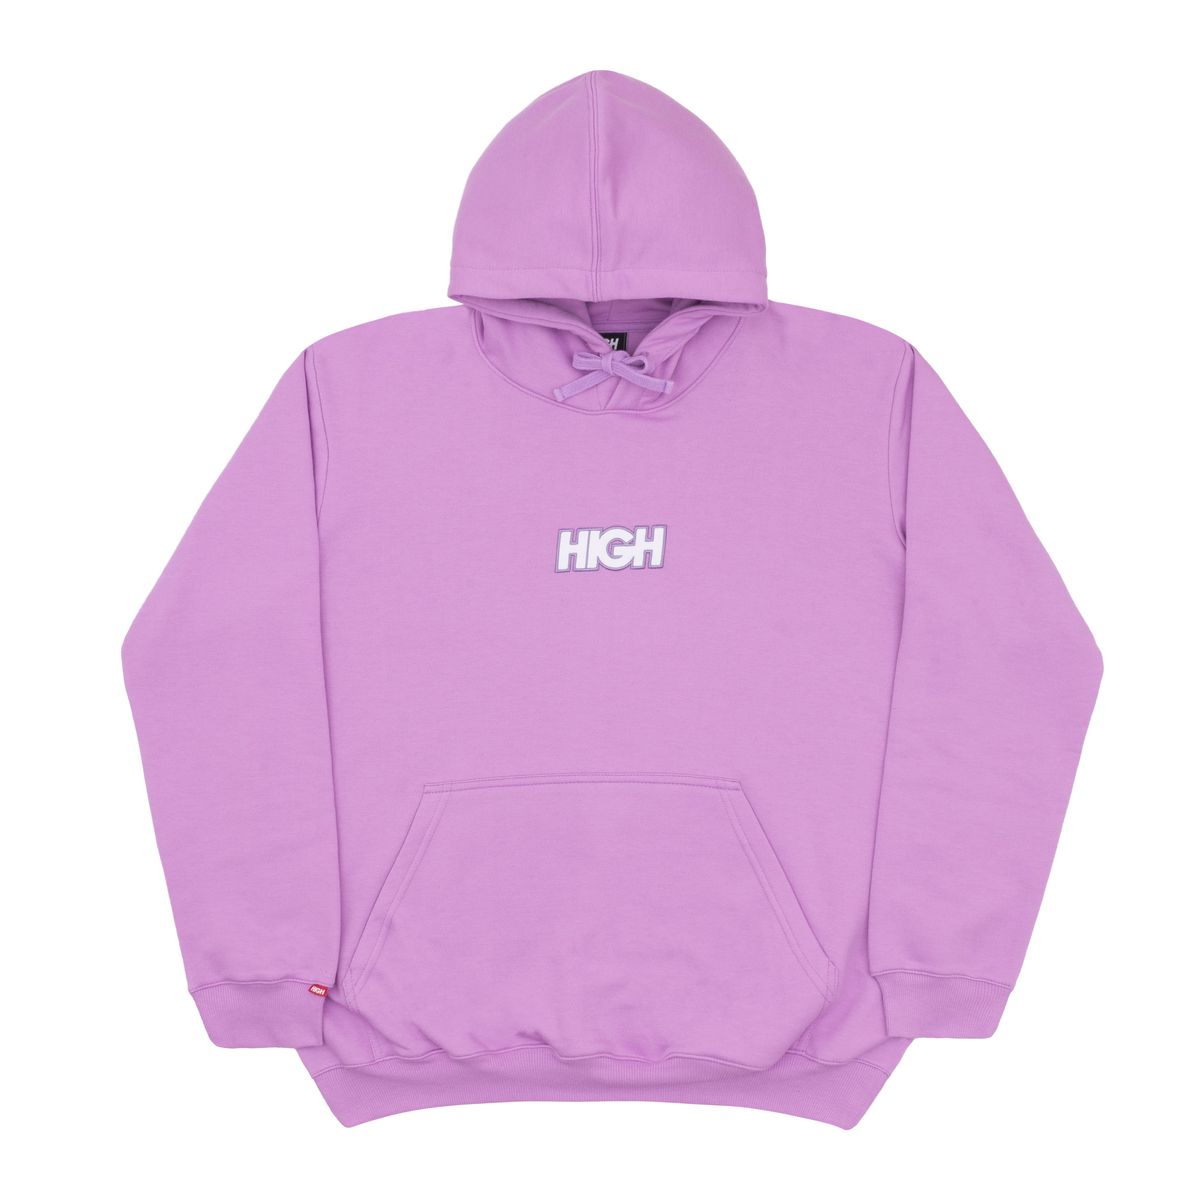 Hoodie High Logo Light Lilac 